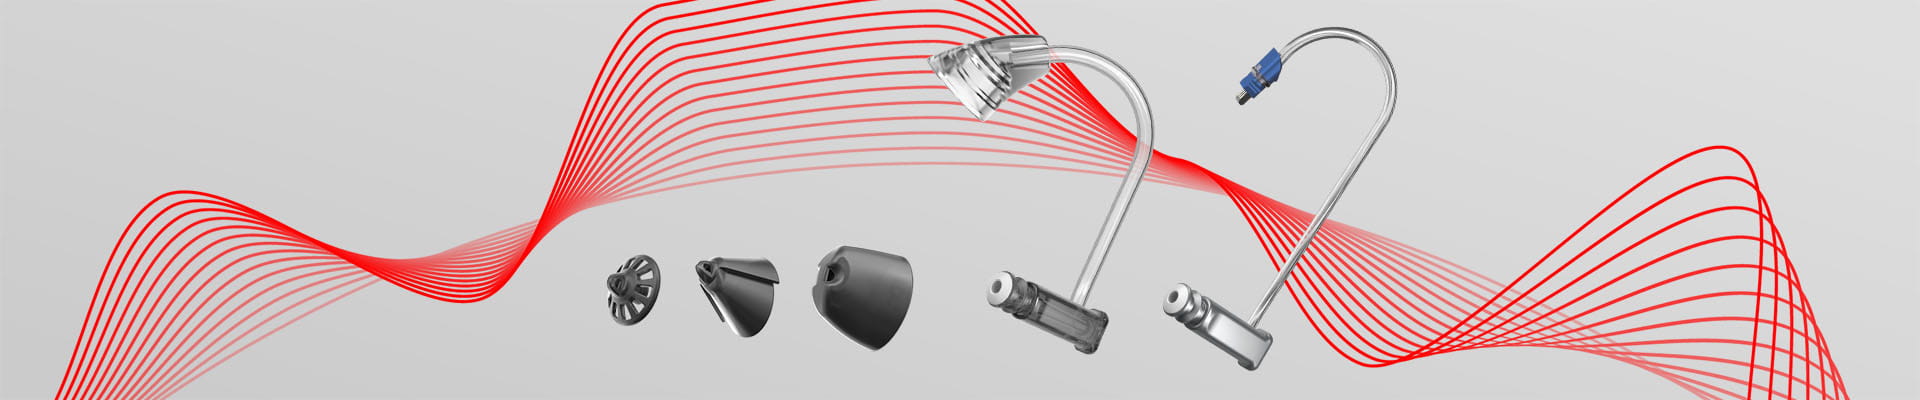 EarWear 3.0 - Verbrauchsmaterial für Hörgeräte | Signia Pro